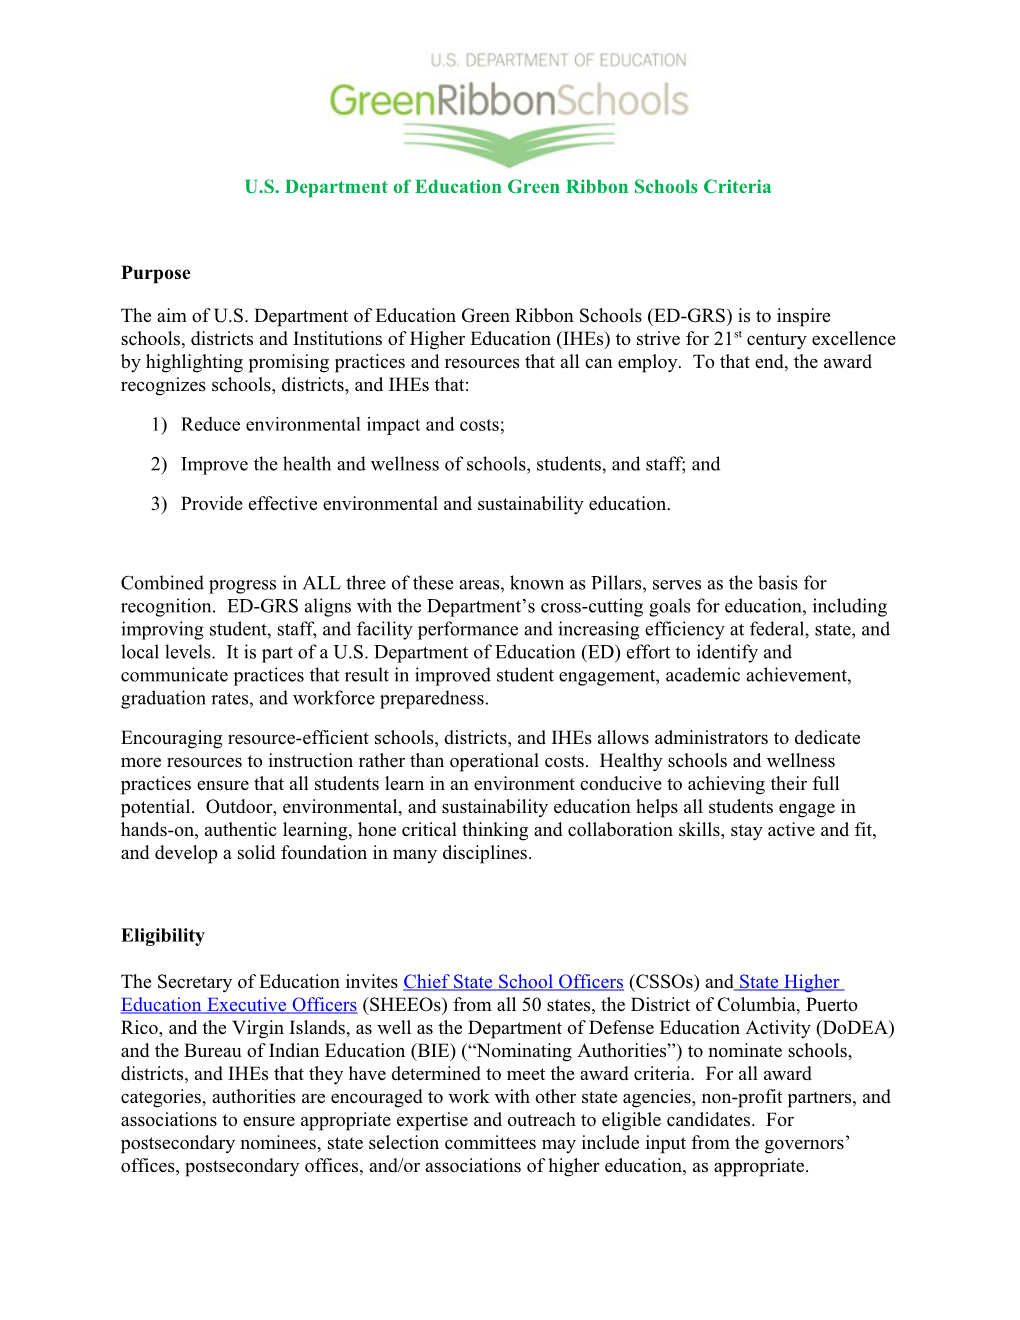 U.S. Department of Education Green Ribbon Schools Criteria (MS Word)